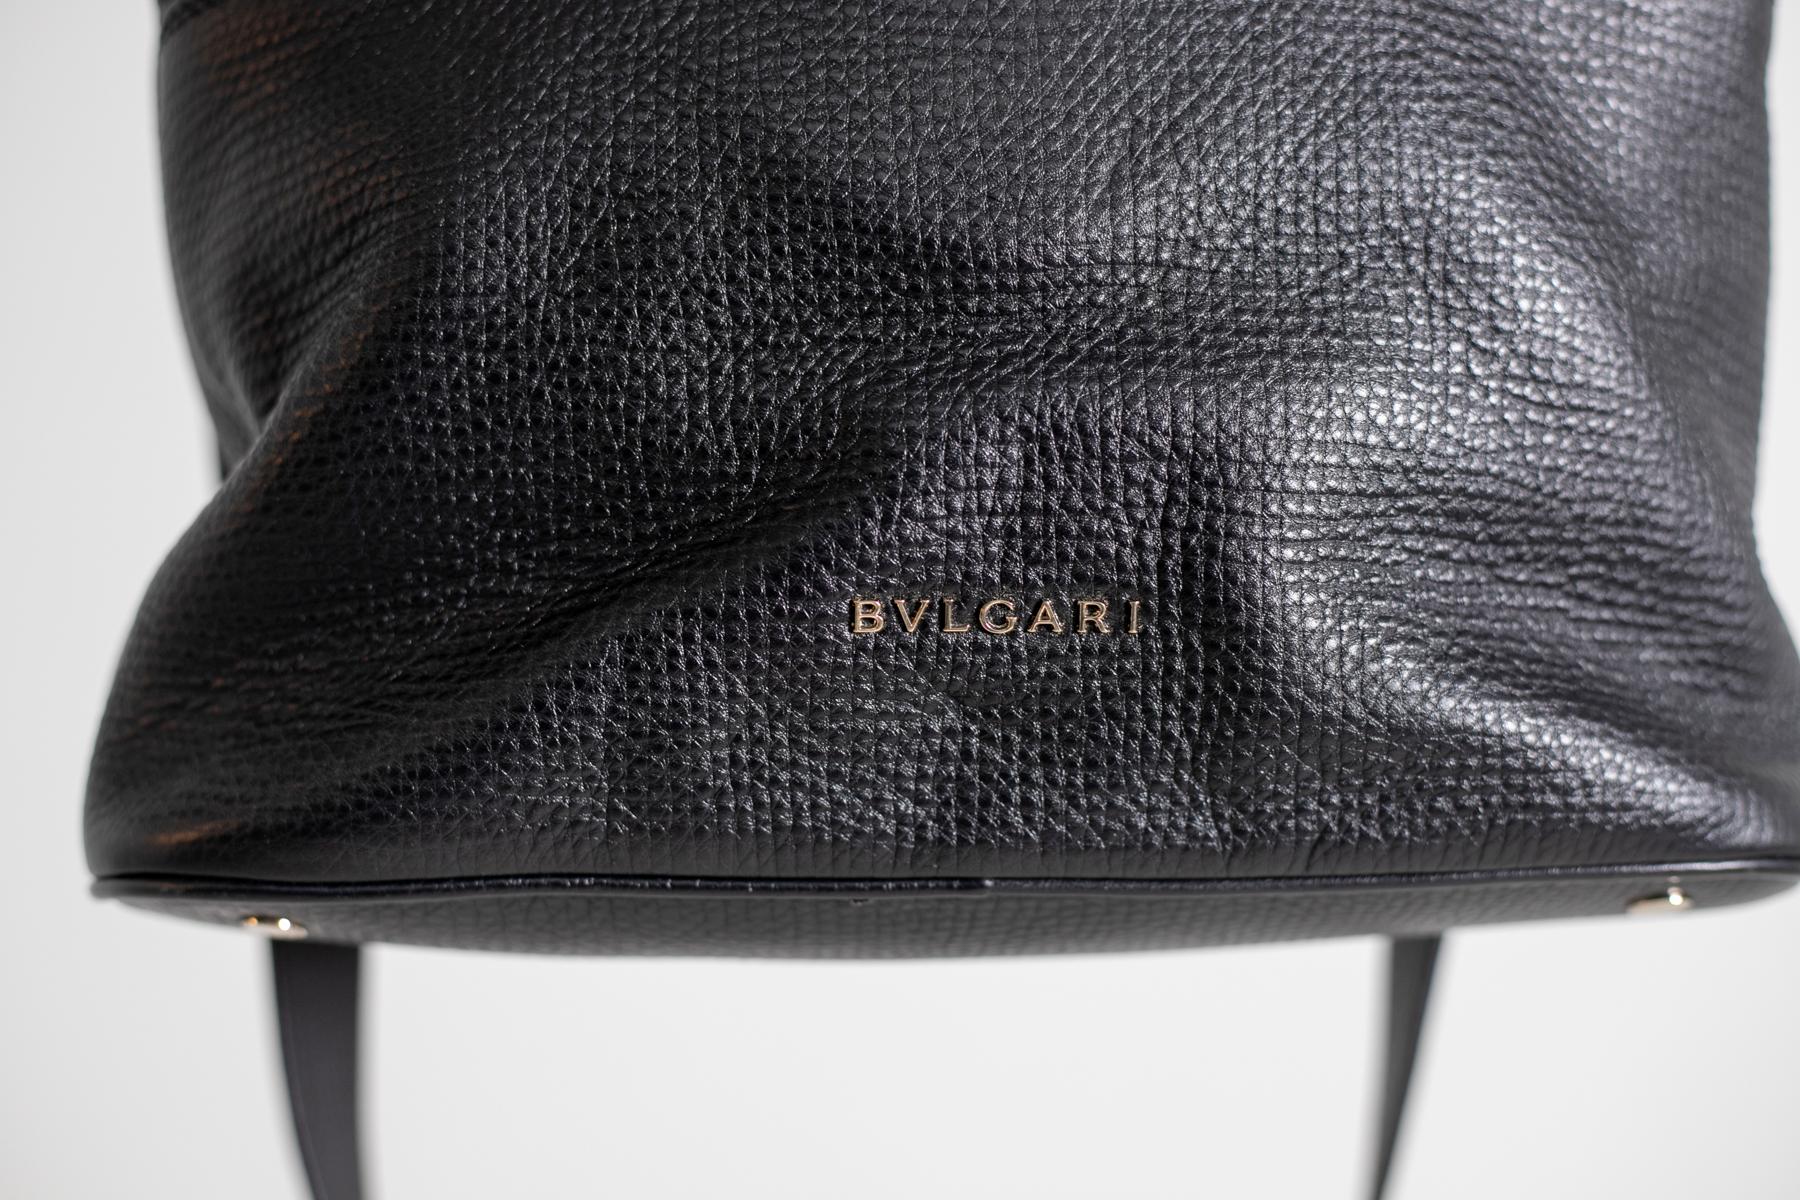 Black Bulgari Handbag Convertible Shoulder Strap Leather with Jewel in Worked Metal